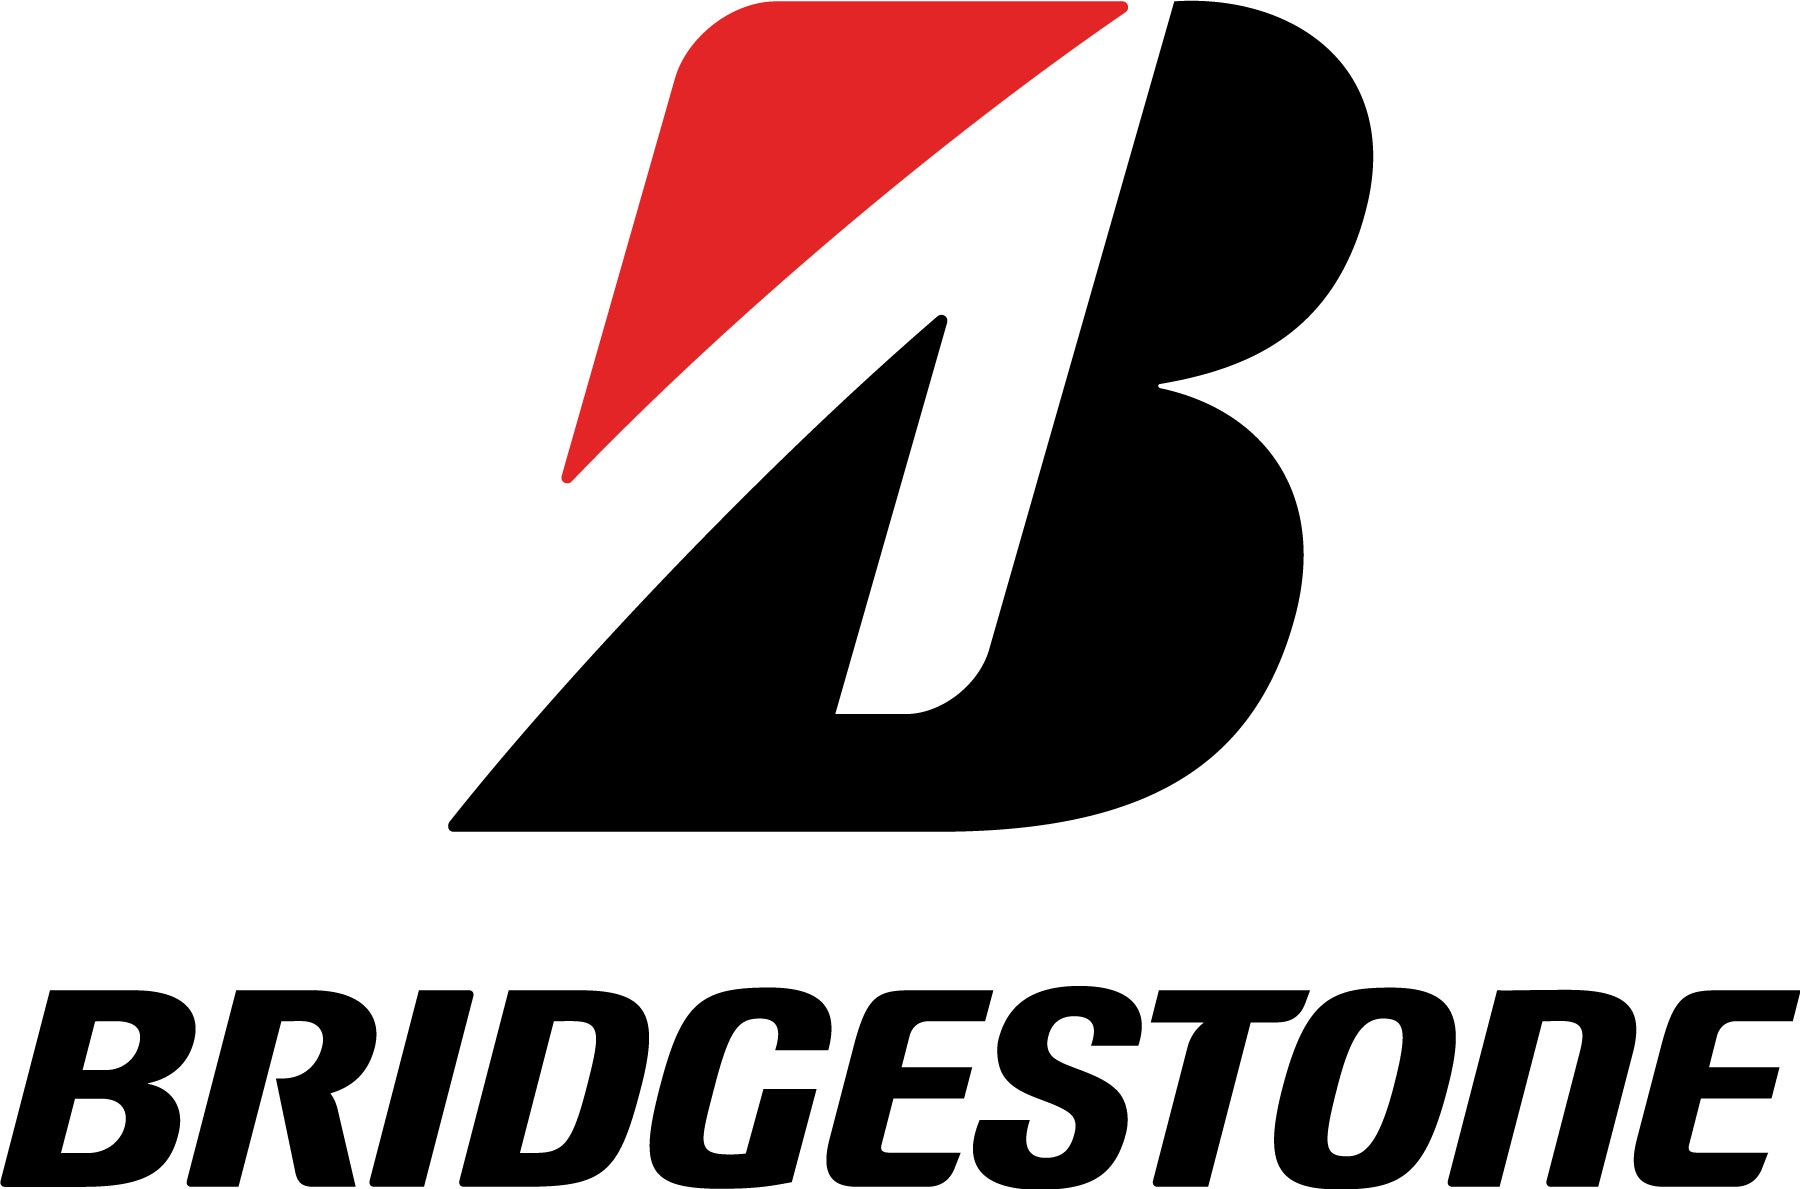 Bridgestone slowly ramping up production